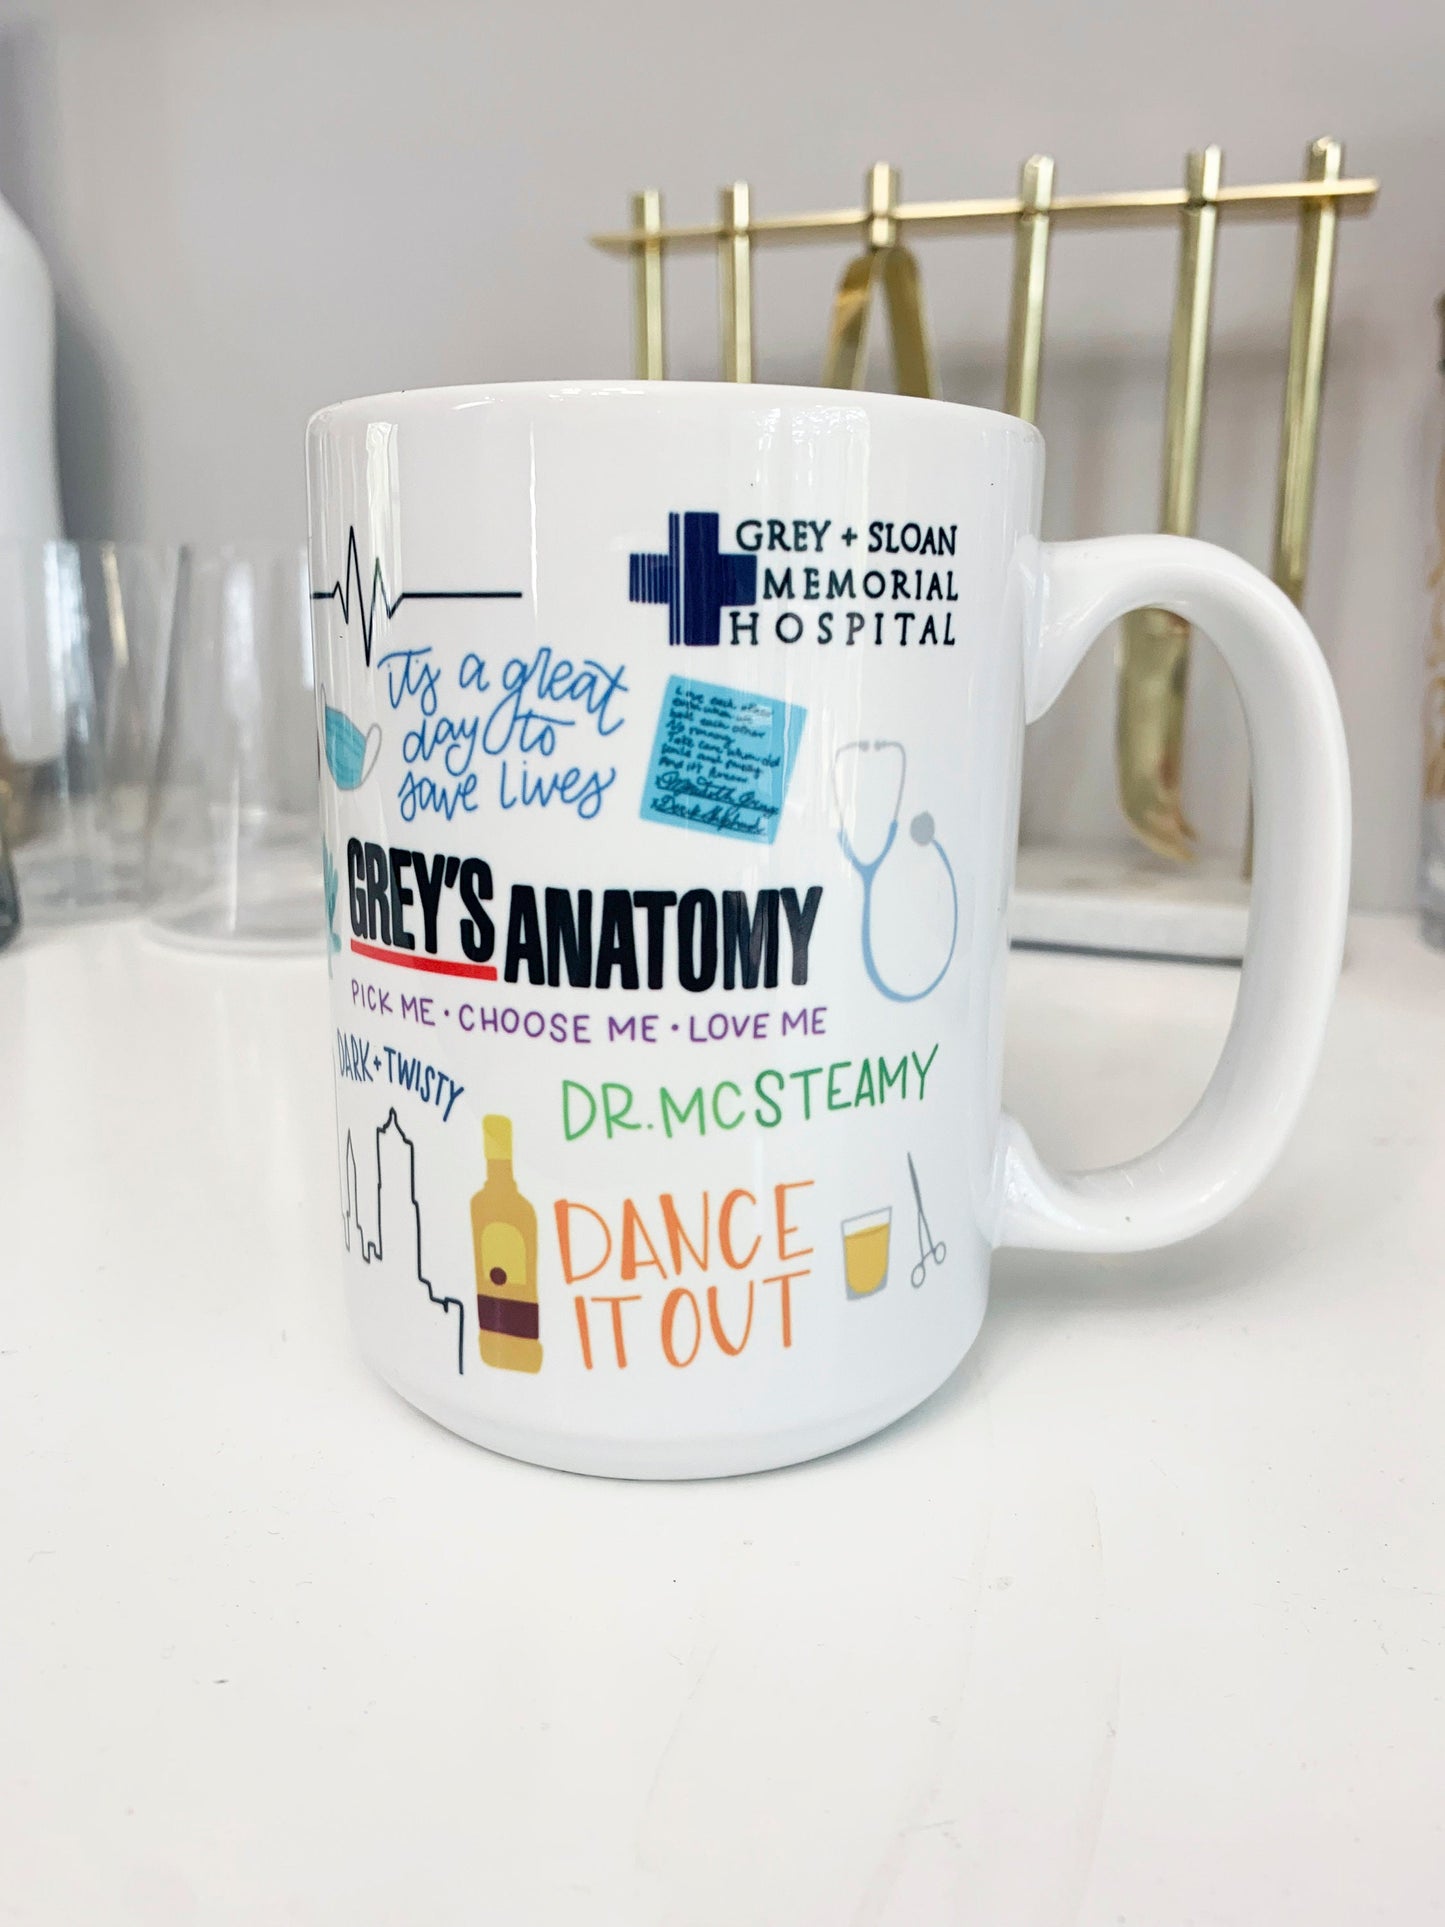 Grey's Anatomy Mug